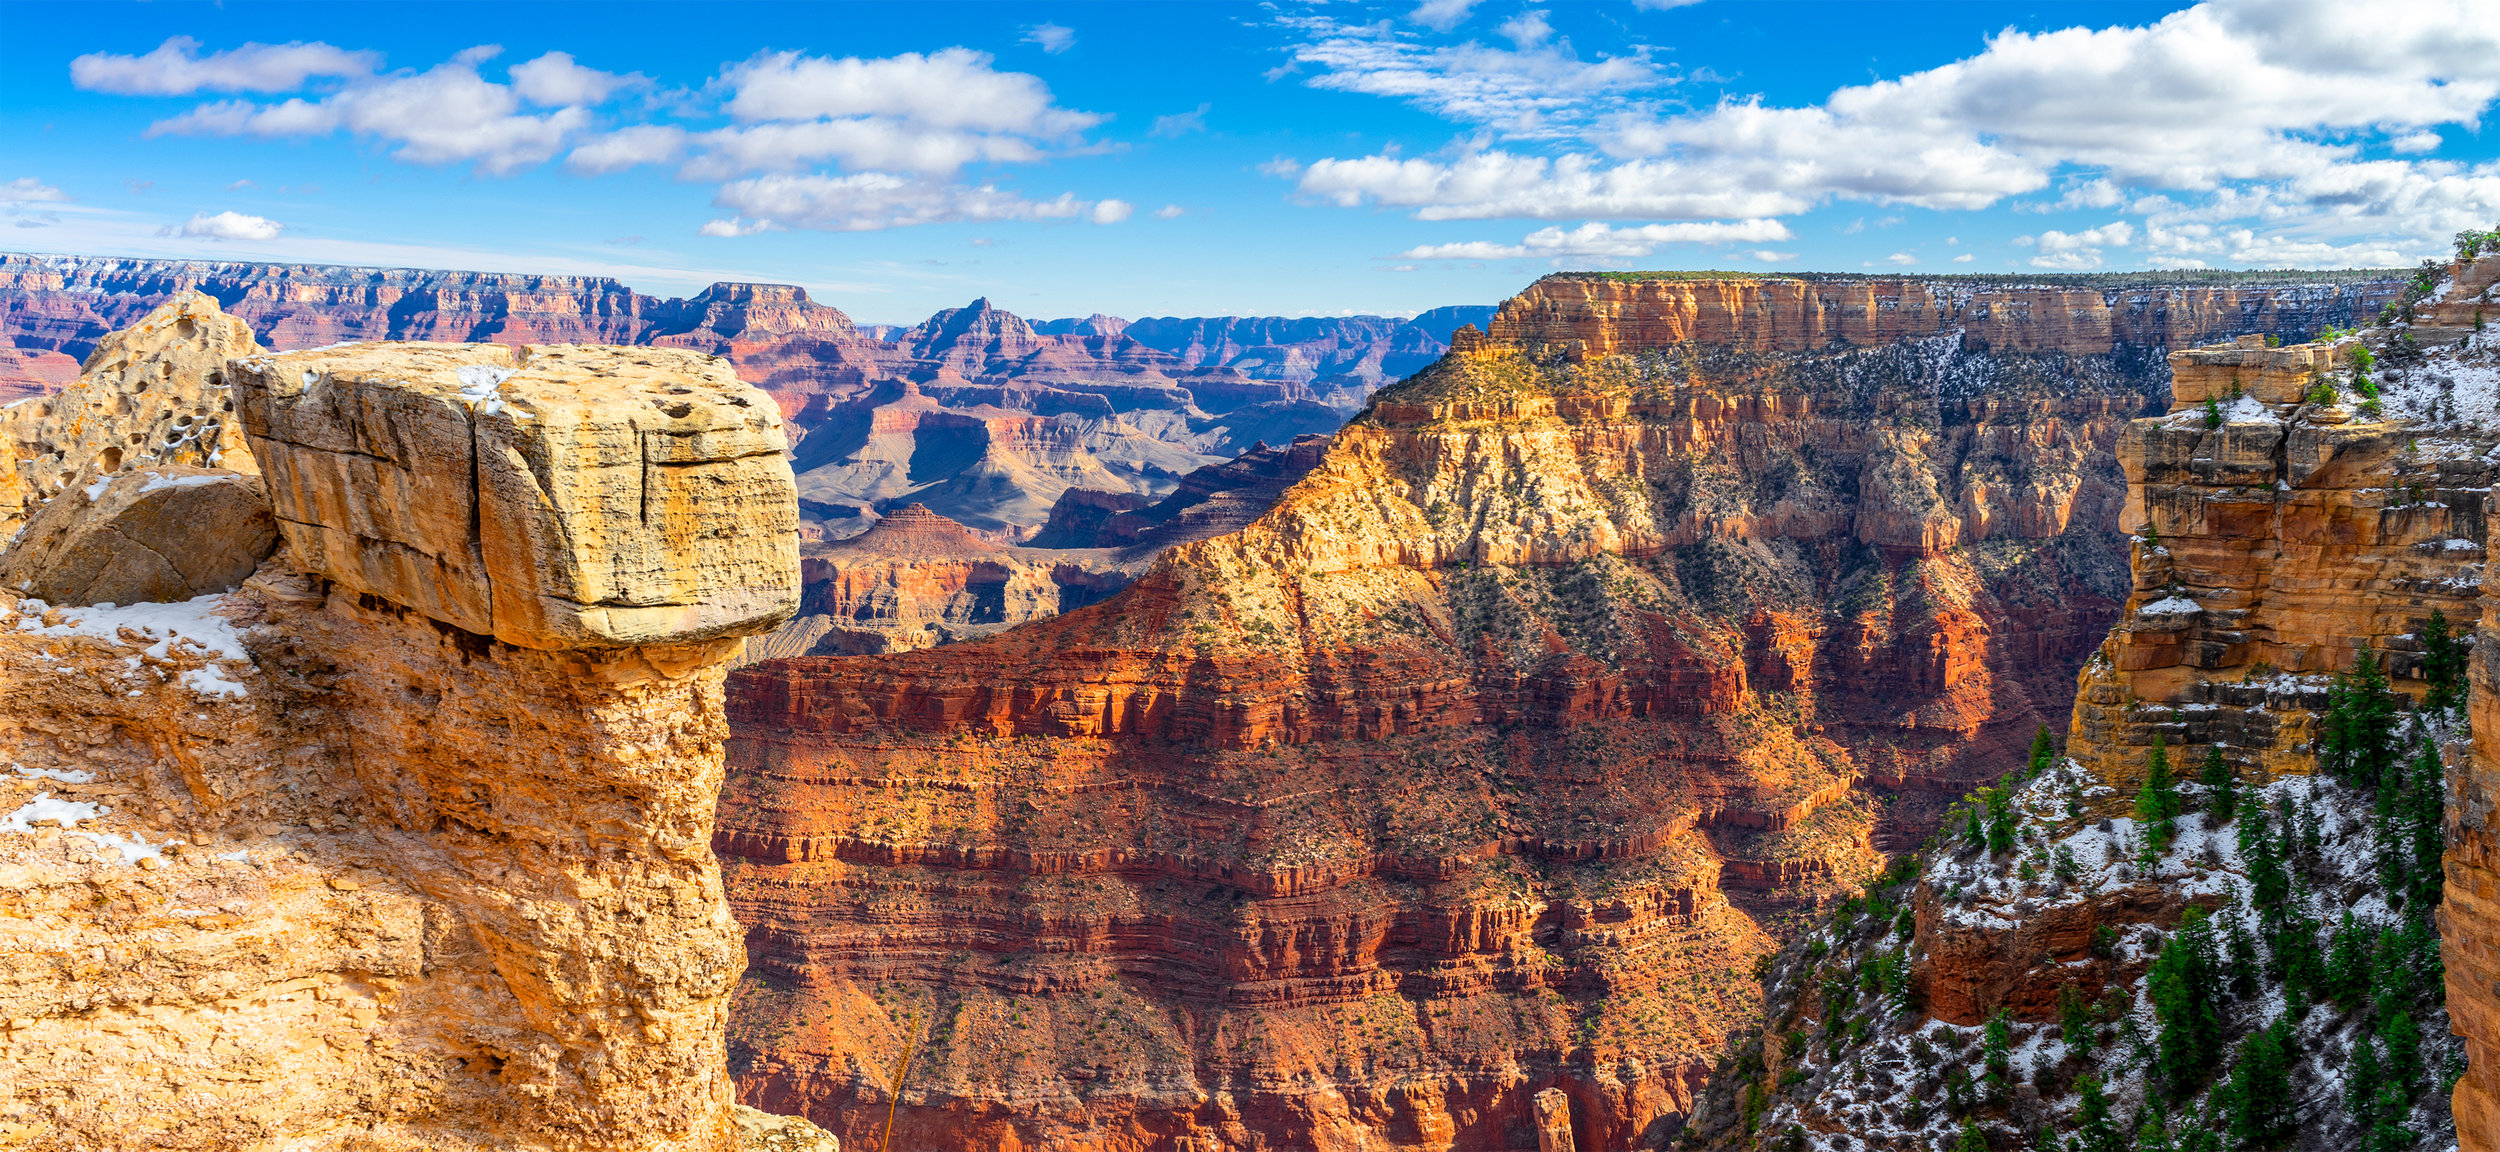 Grand Canyon Panorama 1 (Gallery Size).jpg